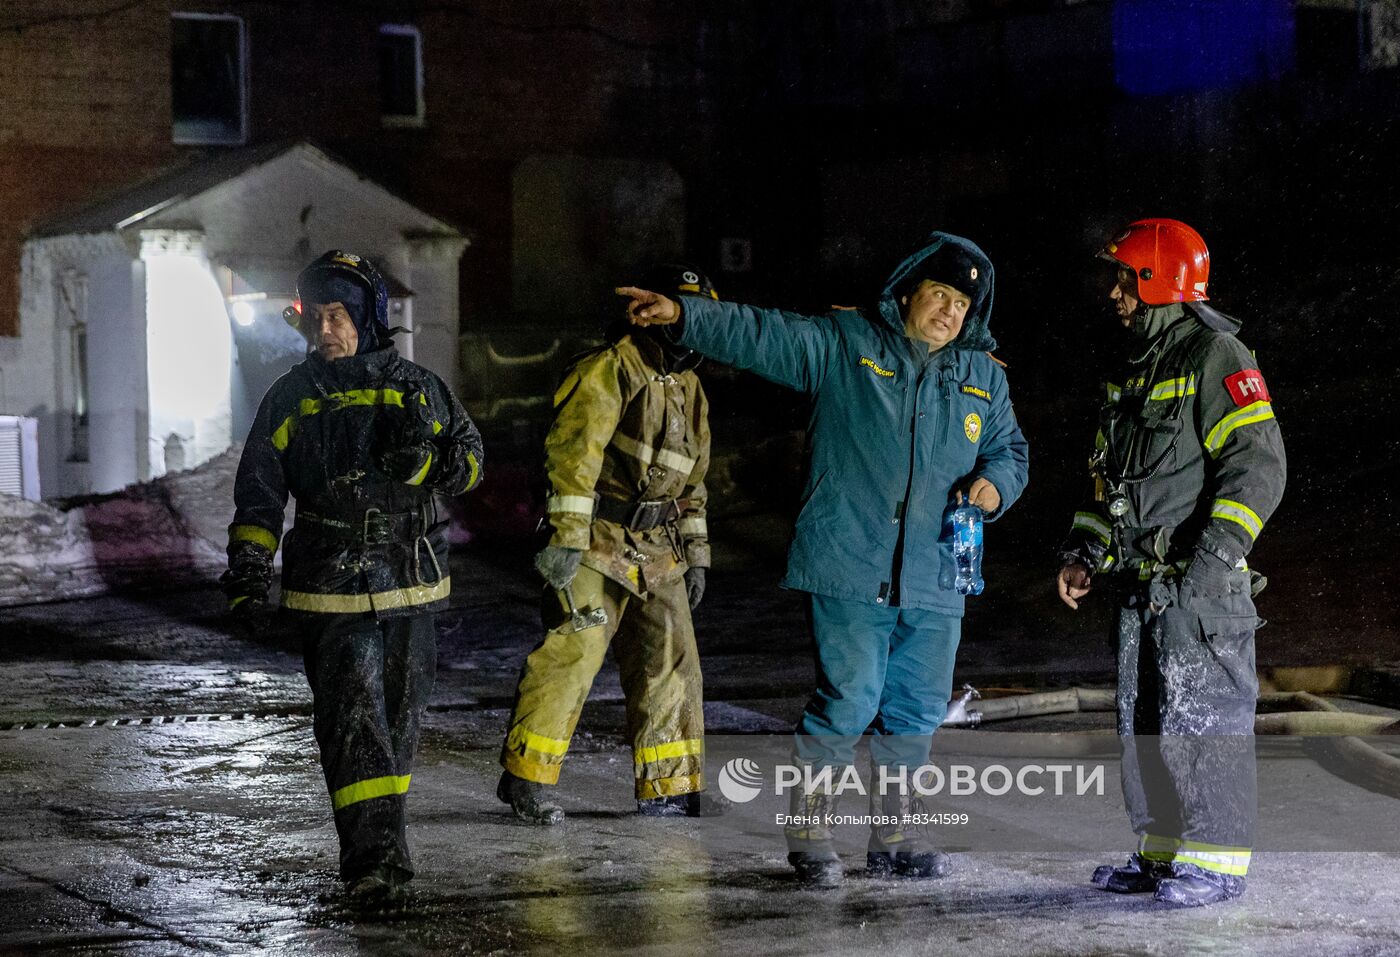 Крупный пожар на складе во Владивостоке Крупный пожар на складе во Владивостоке